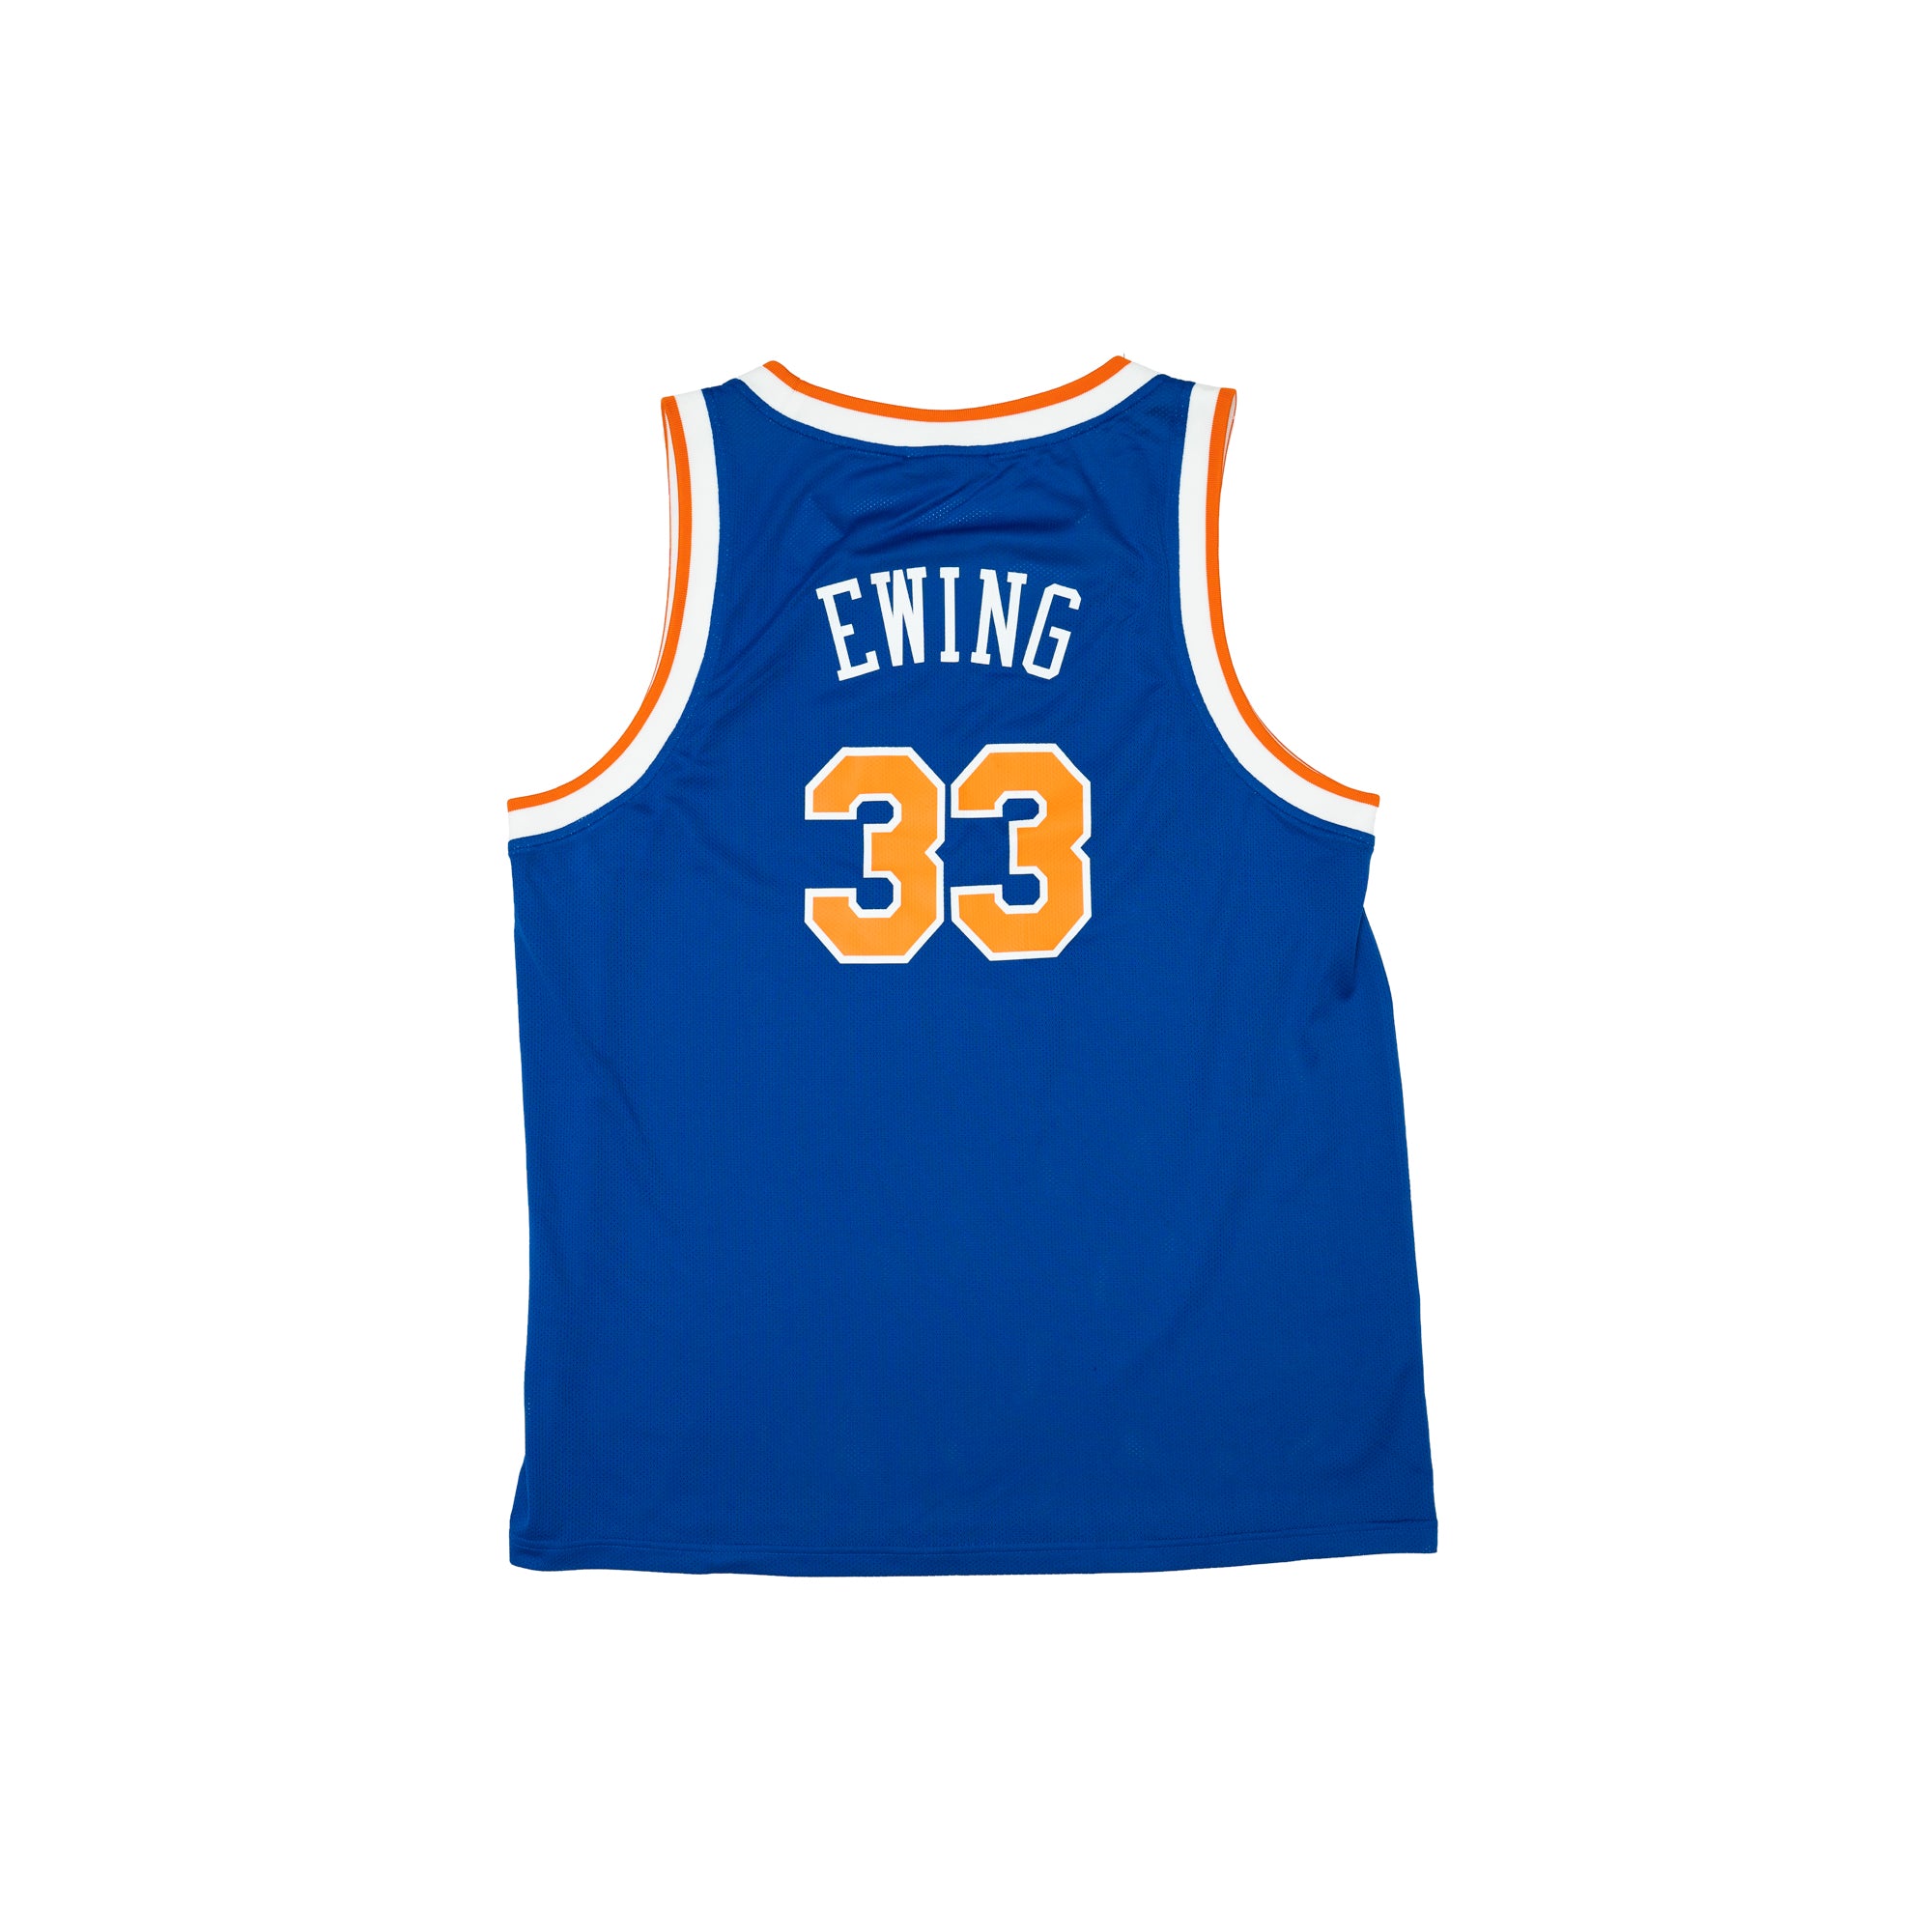 Ewing Blue Basketball Jersey